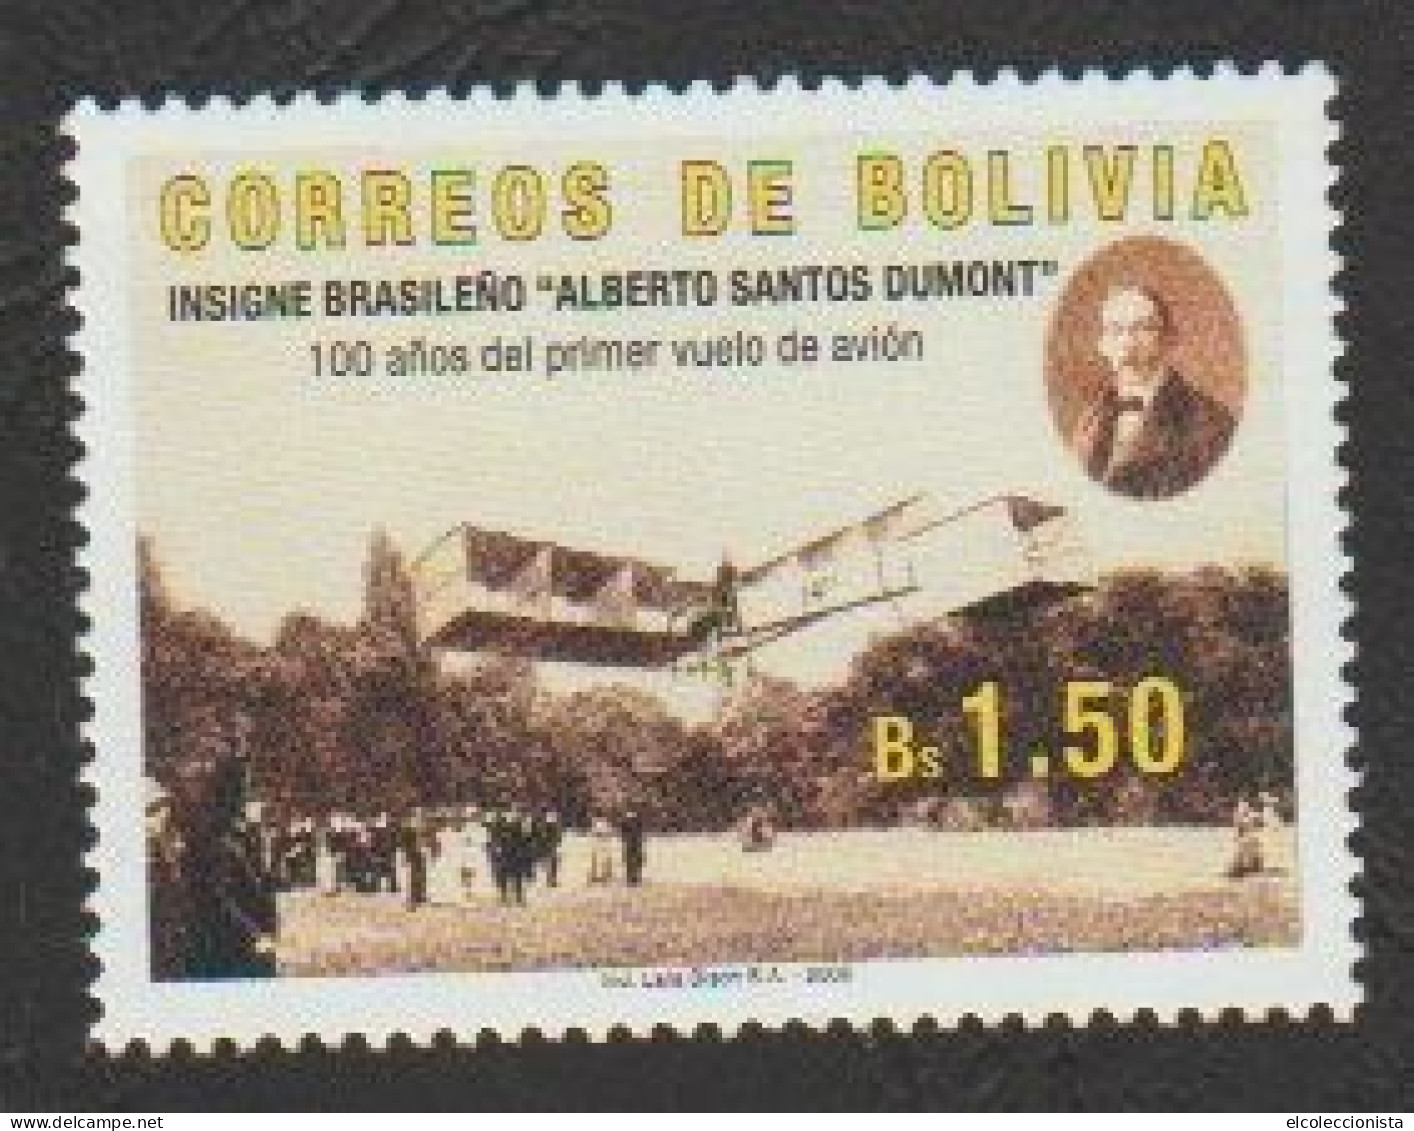 2006 Bolivia First Airplane Flight Of Alberto Santos Dumont MNH Scott 1275 - Bolivia